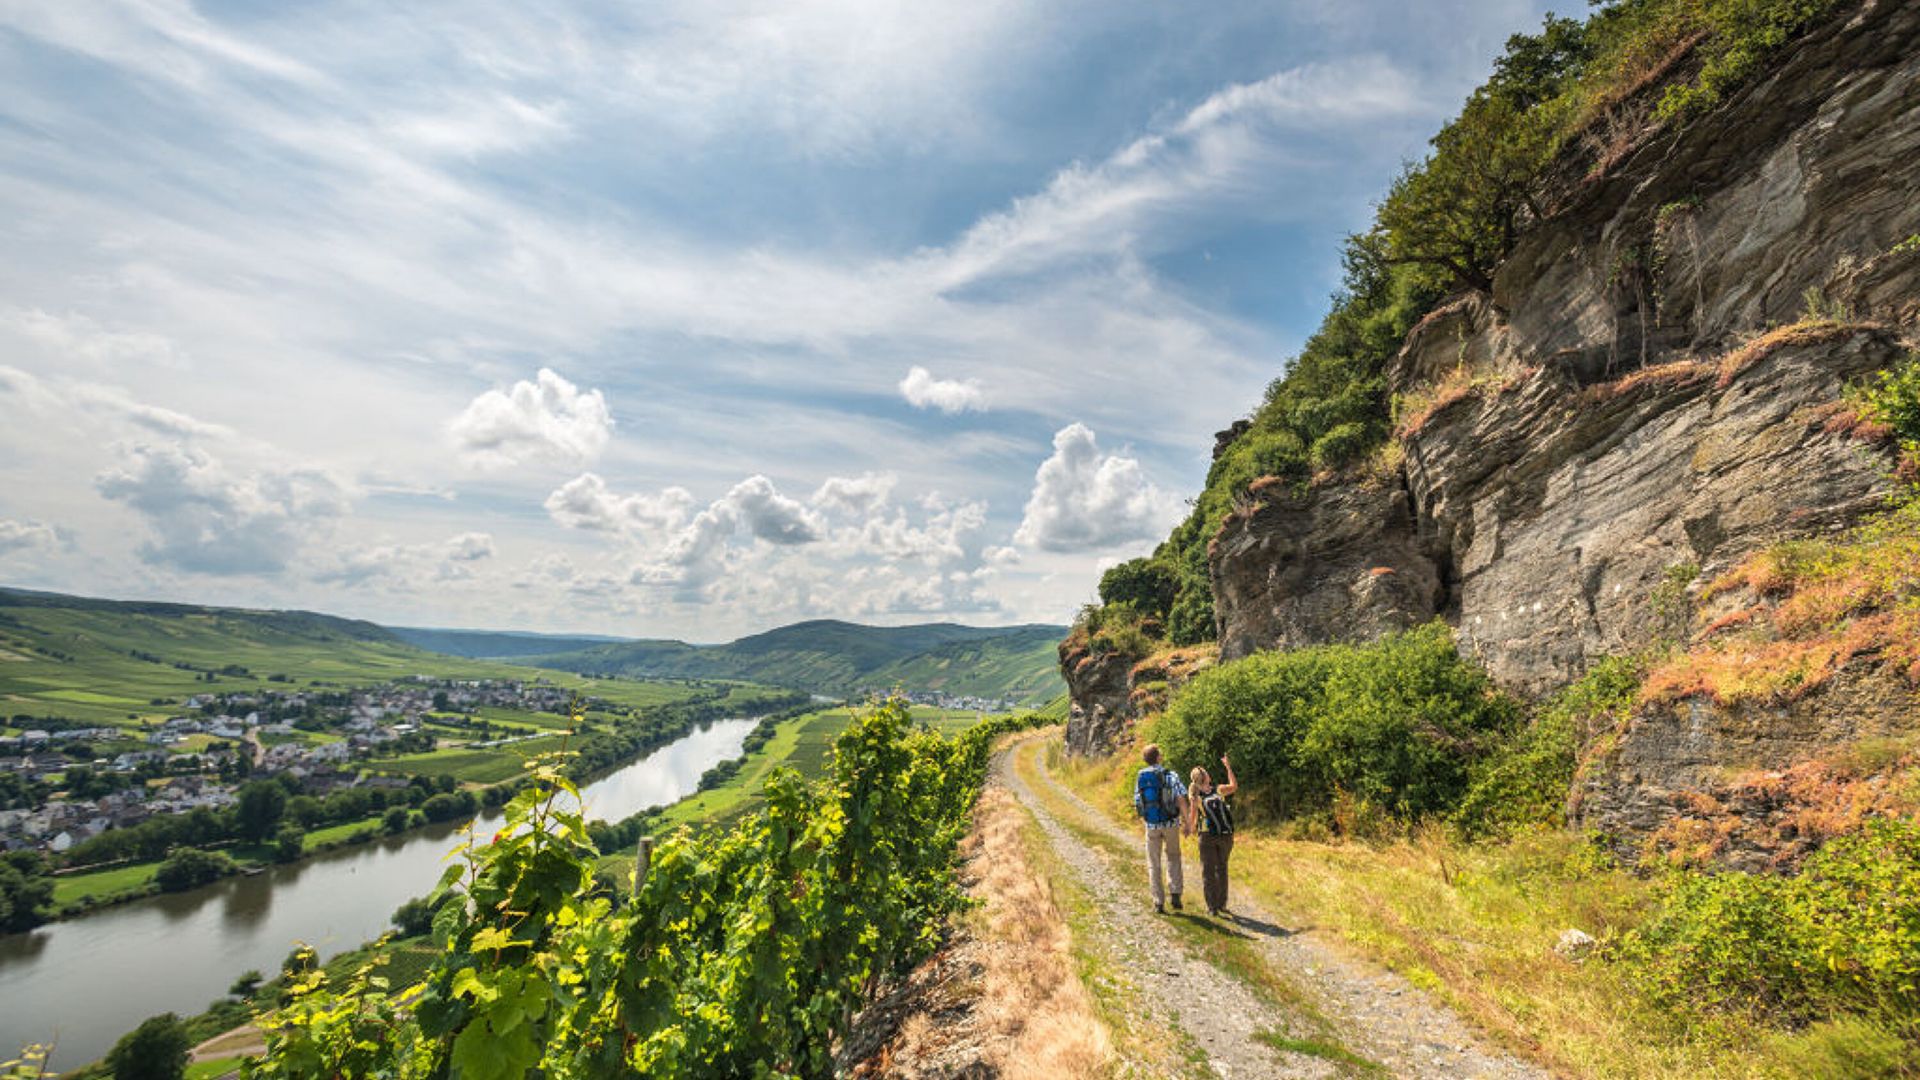 Rhineland-Palatinate: Hikers on the Moselsteig